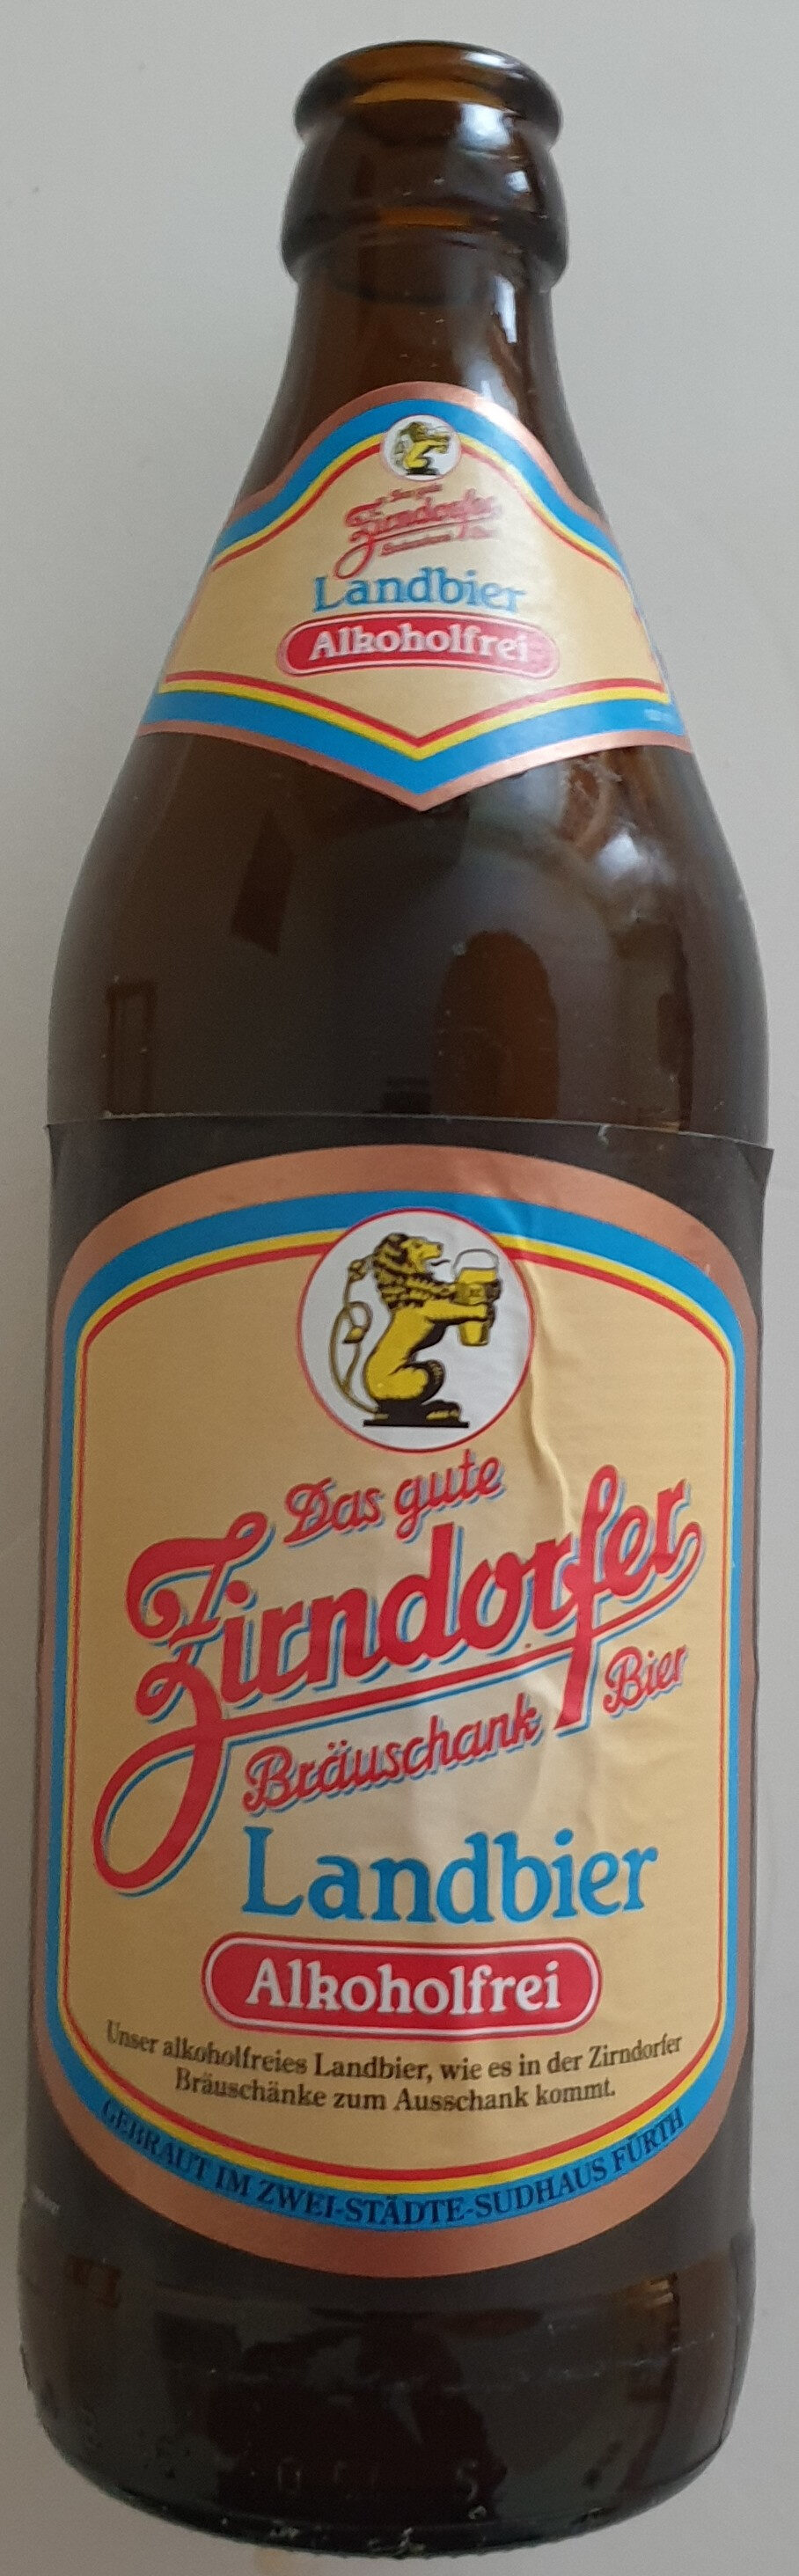 Das gute Zirndorfer Landbier alkoholfrei - Produit - de